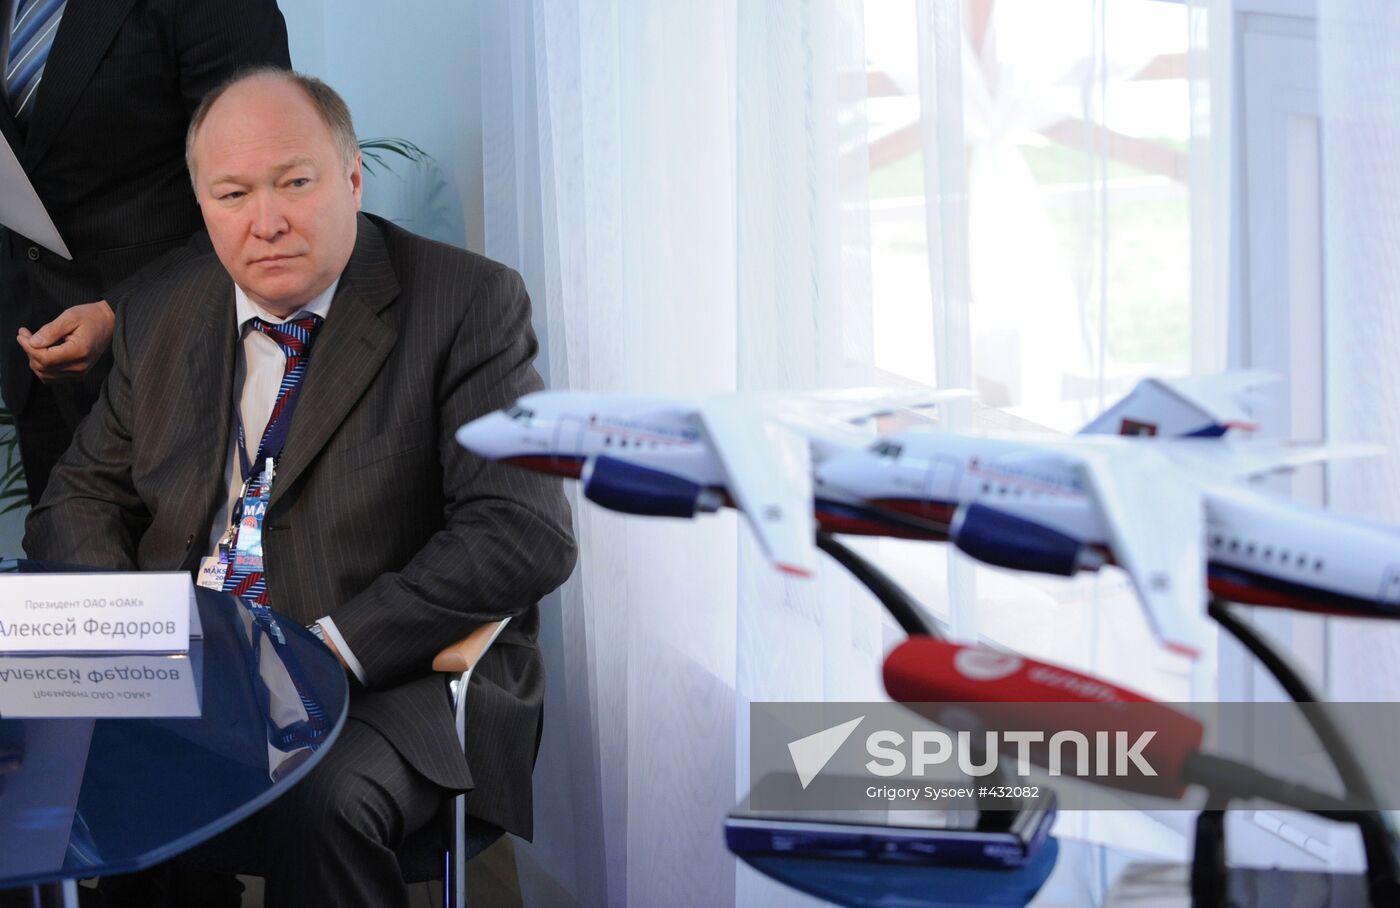 Alexei Fyedorov, President, United Aircraft Corporation